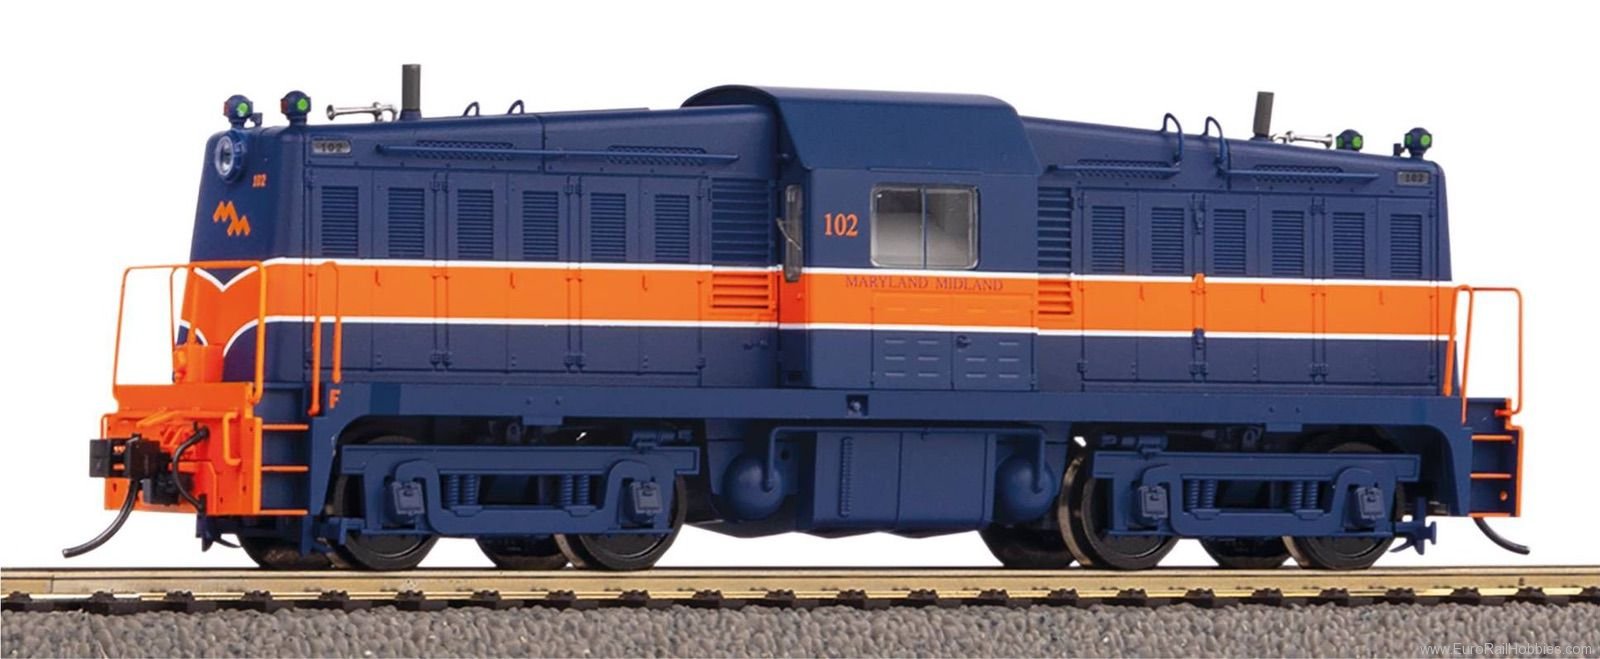 Piko 52469 Diesel Locomotive MMID 65-Ton 102 (Digital So